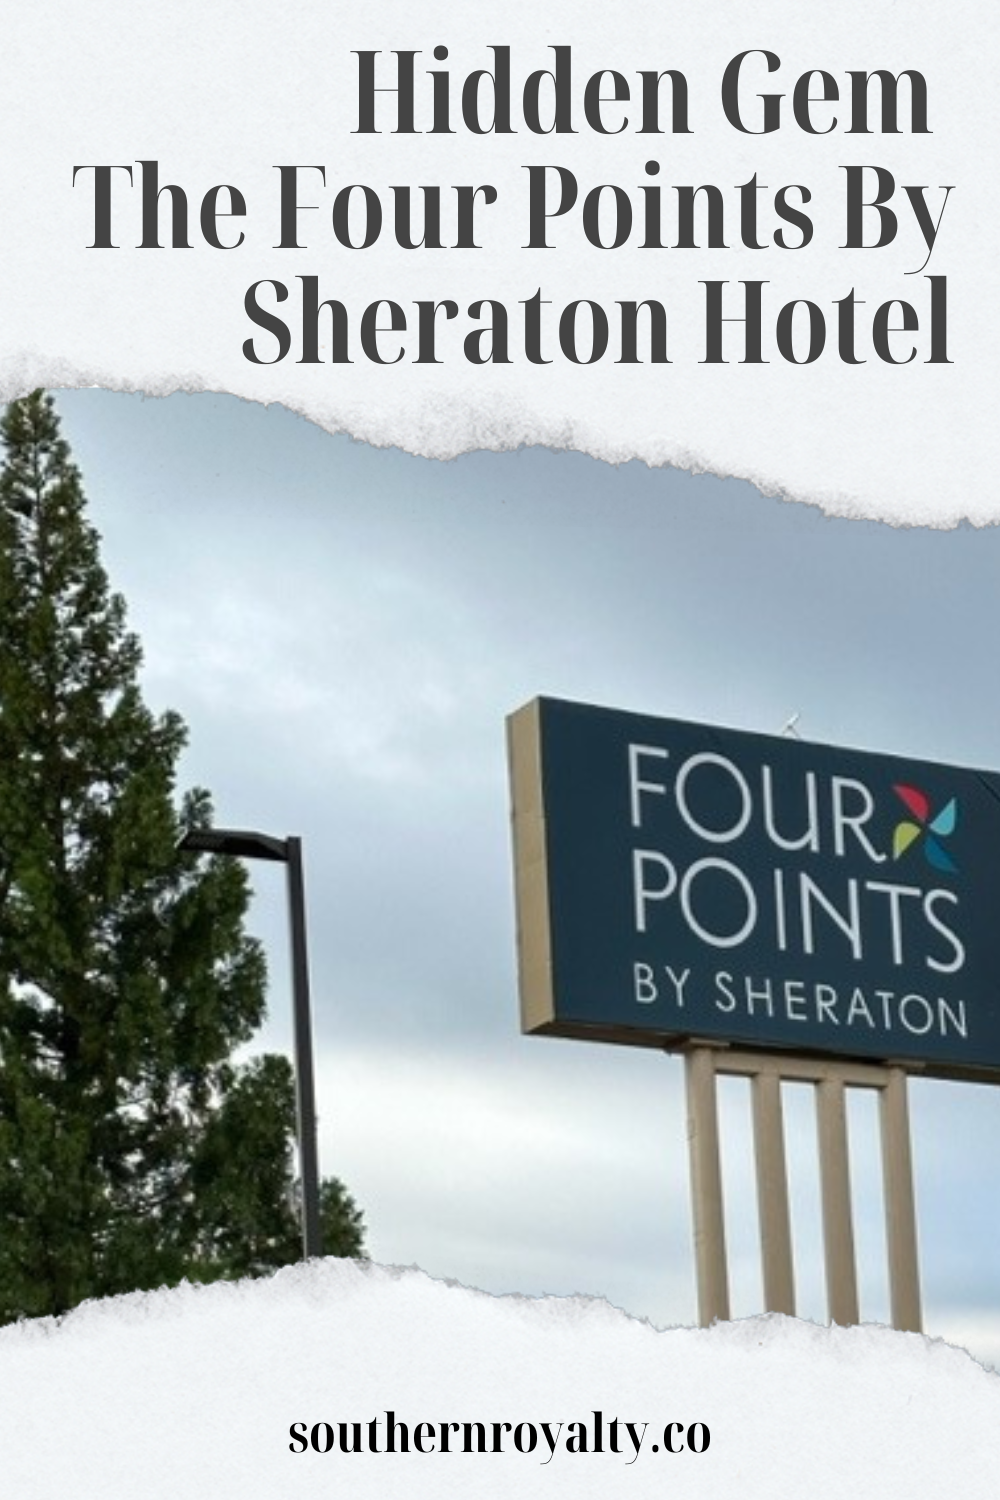 Hidden Gem Four Points by Sheraton Hotel